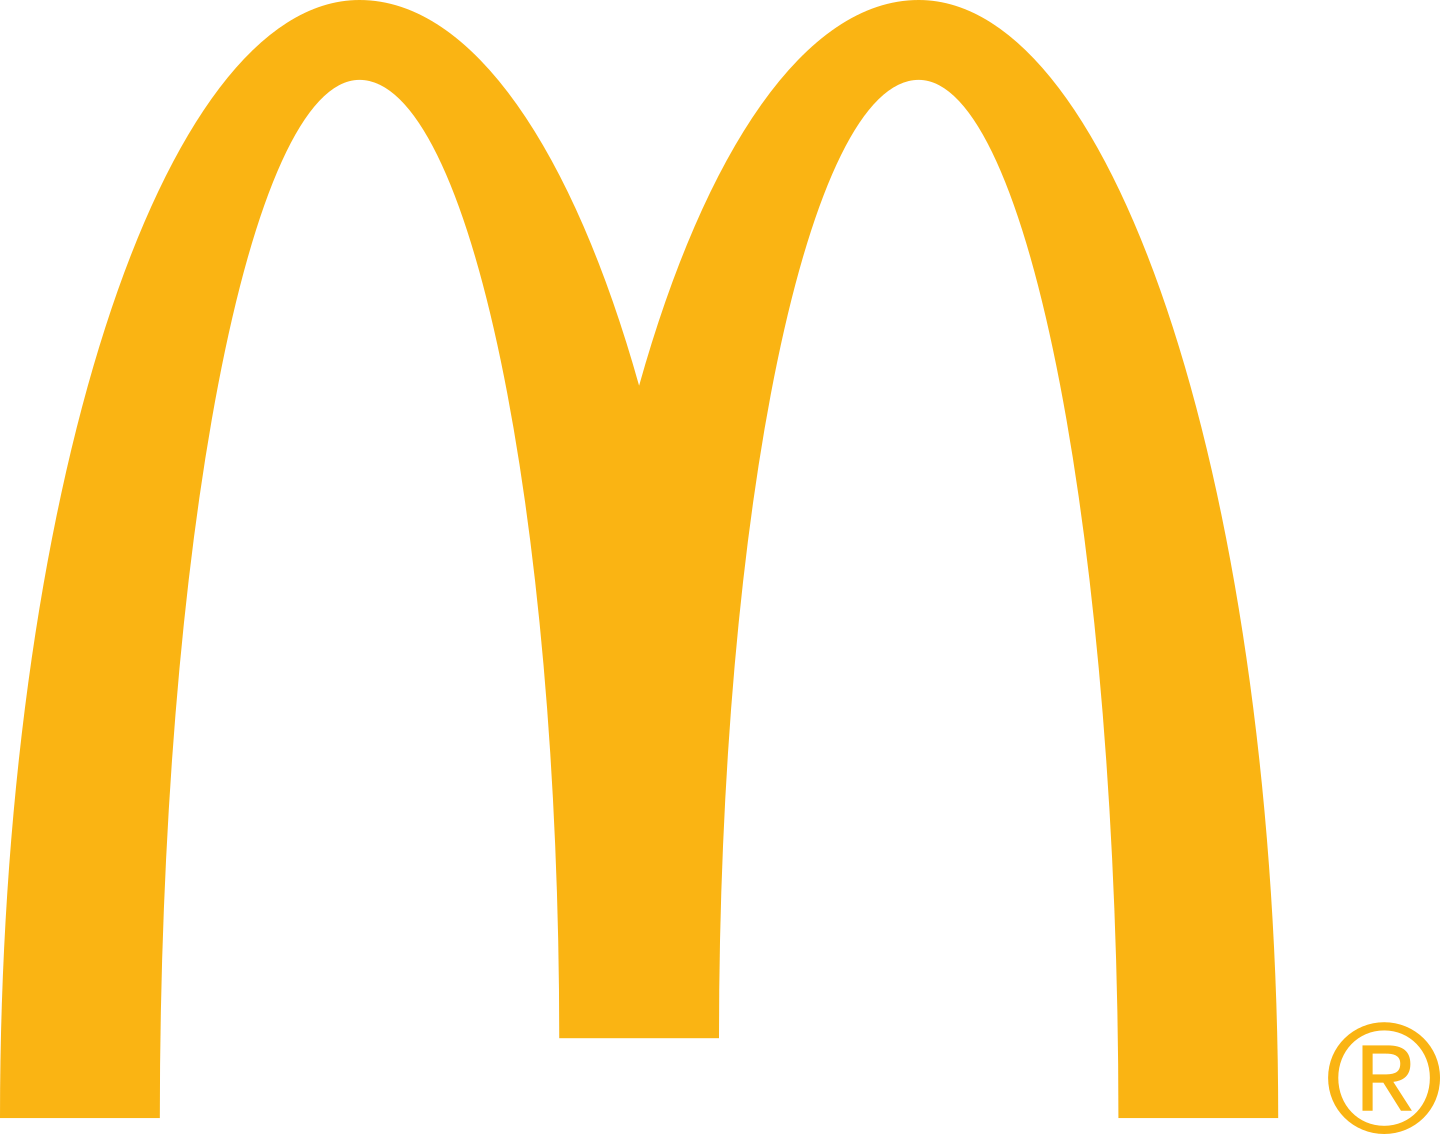 mcdonalds logo 3 1 - McDonald's Logo